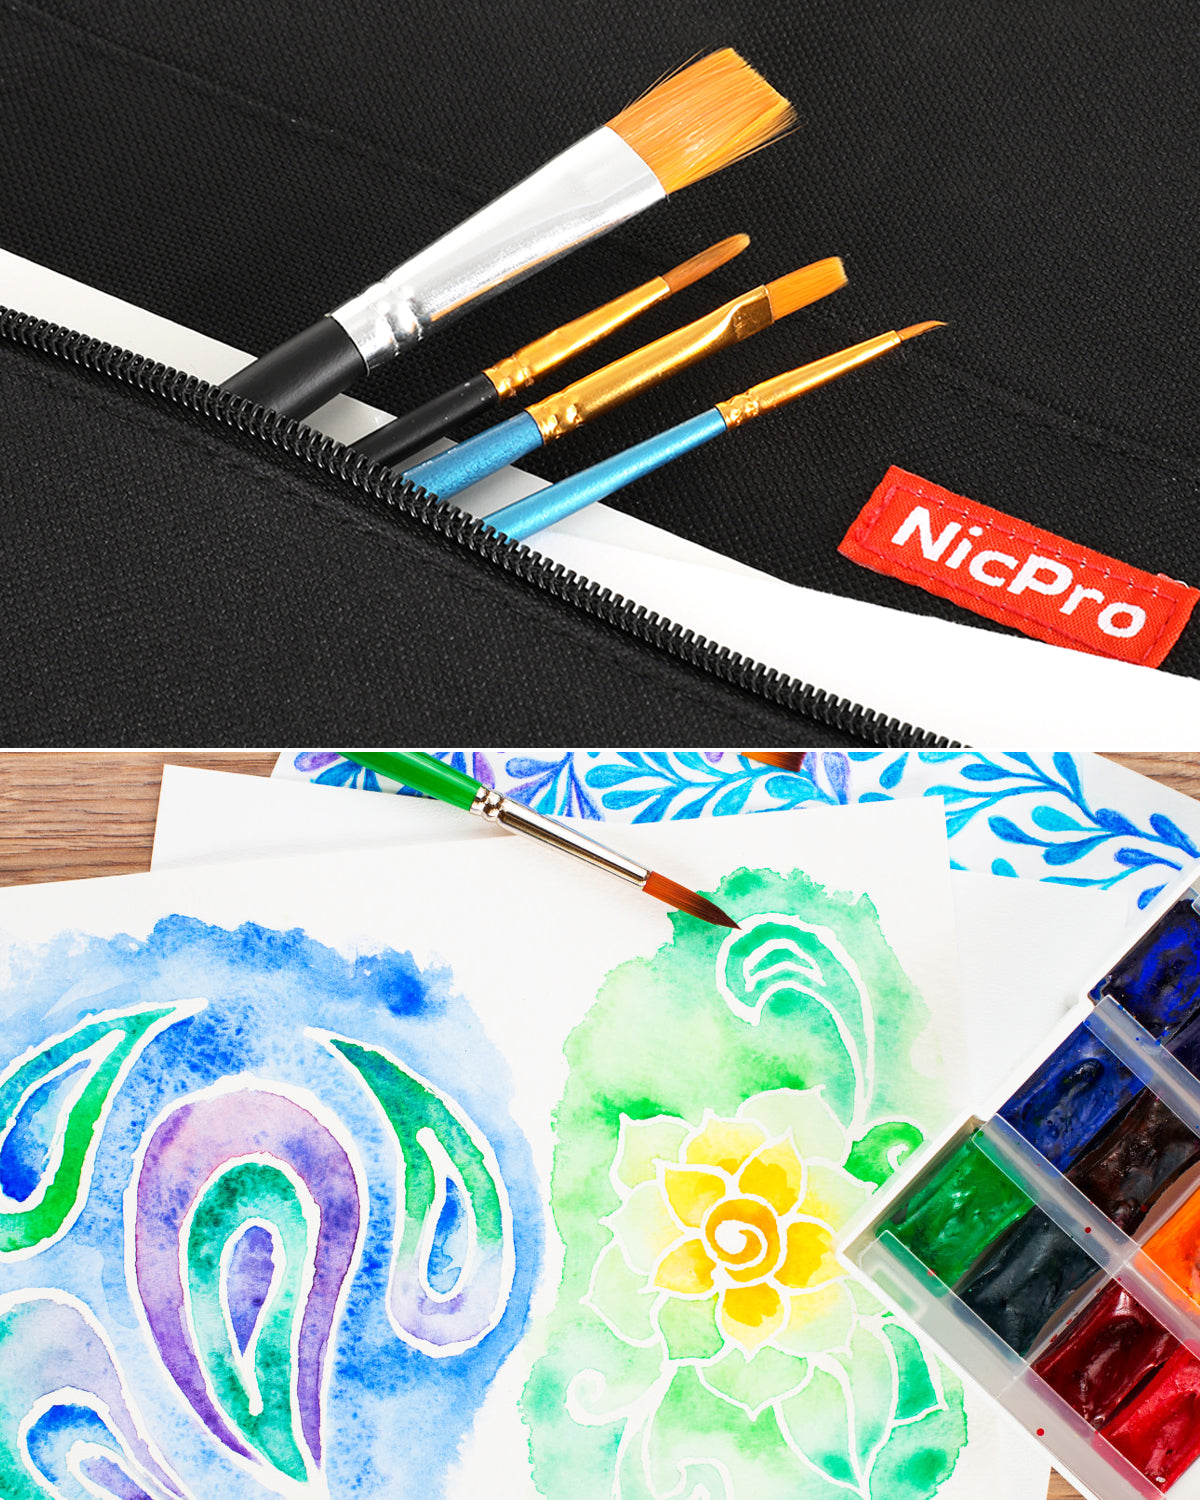 Nicpro Light Weight Art Portfolio Bag, 24x36 Black Art Canvas Portfolio Case with Detachable Shoulder Strap, Leather Corners, Carrying Storage Case